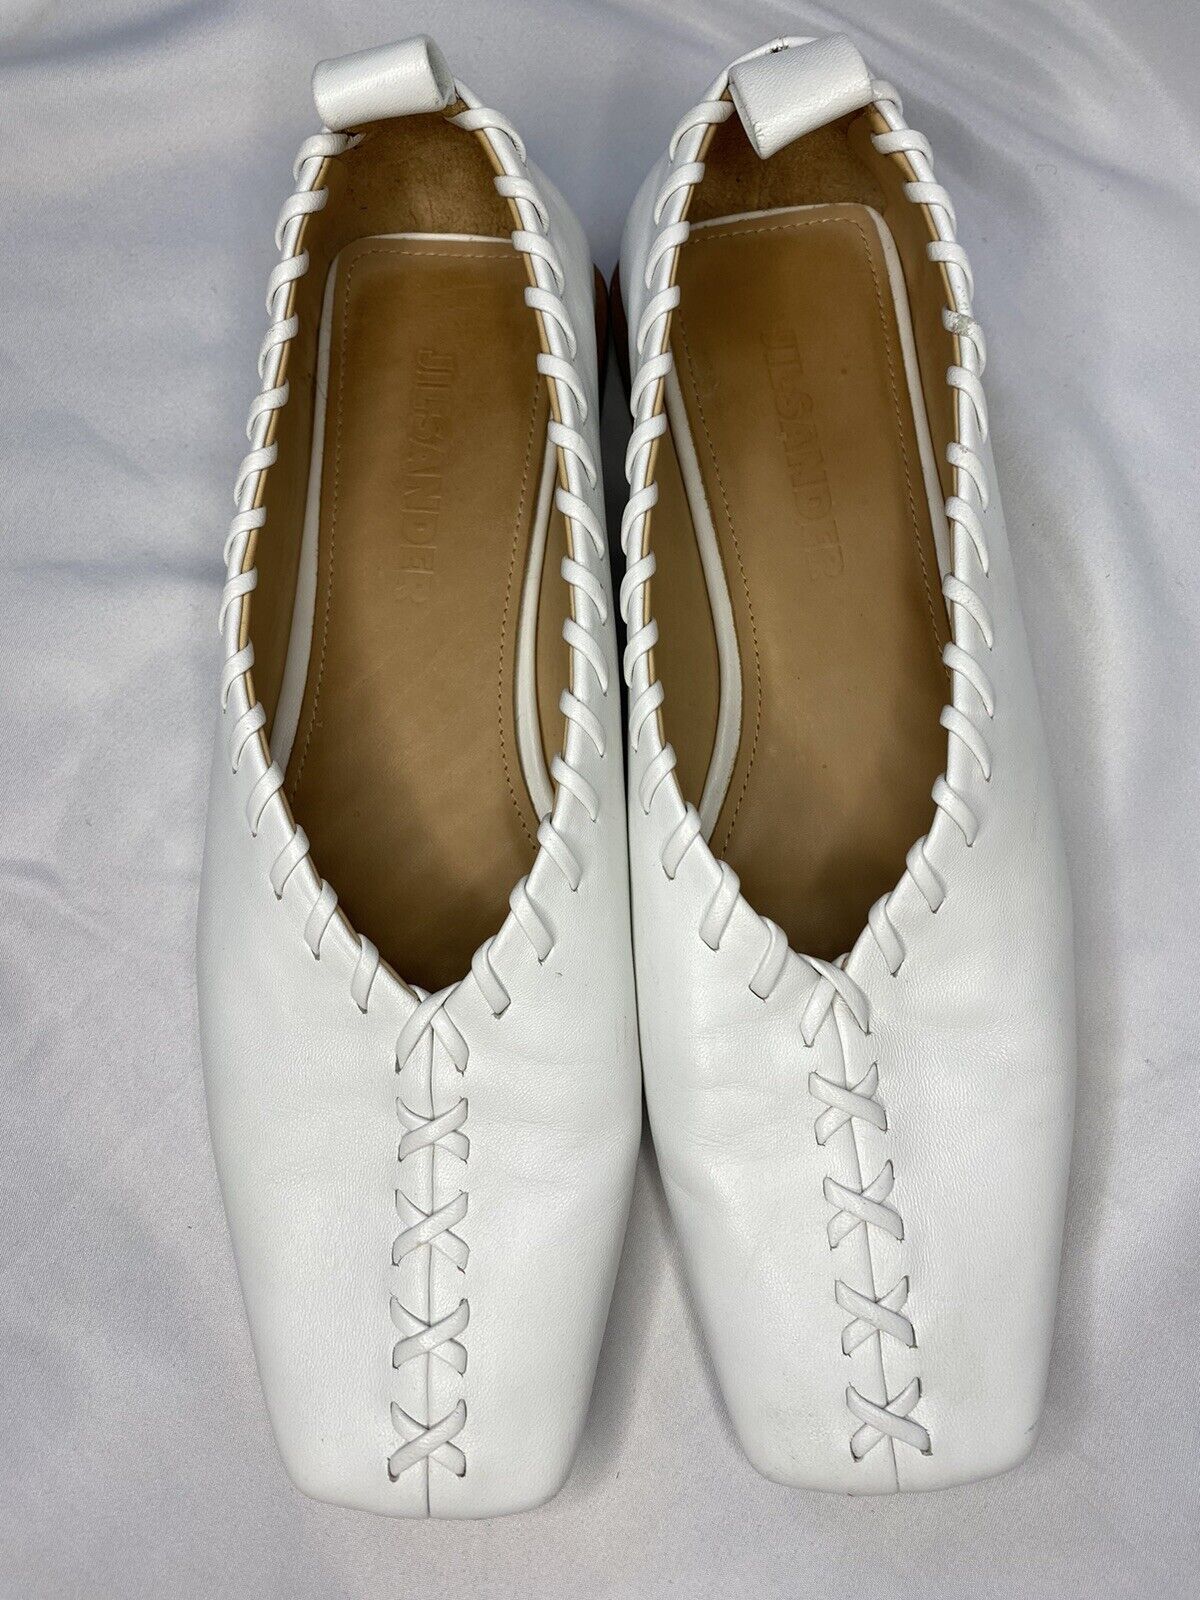 jil sander leather ballet flat women shoes -$780 value